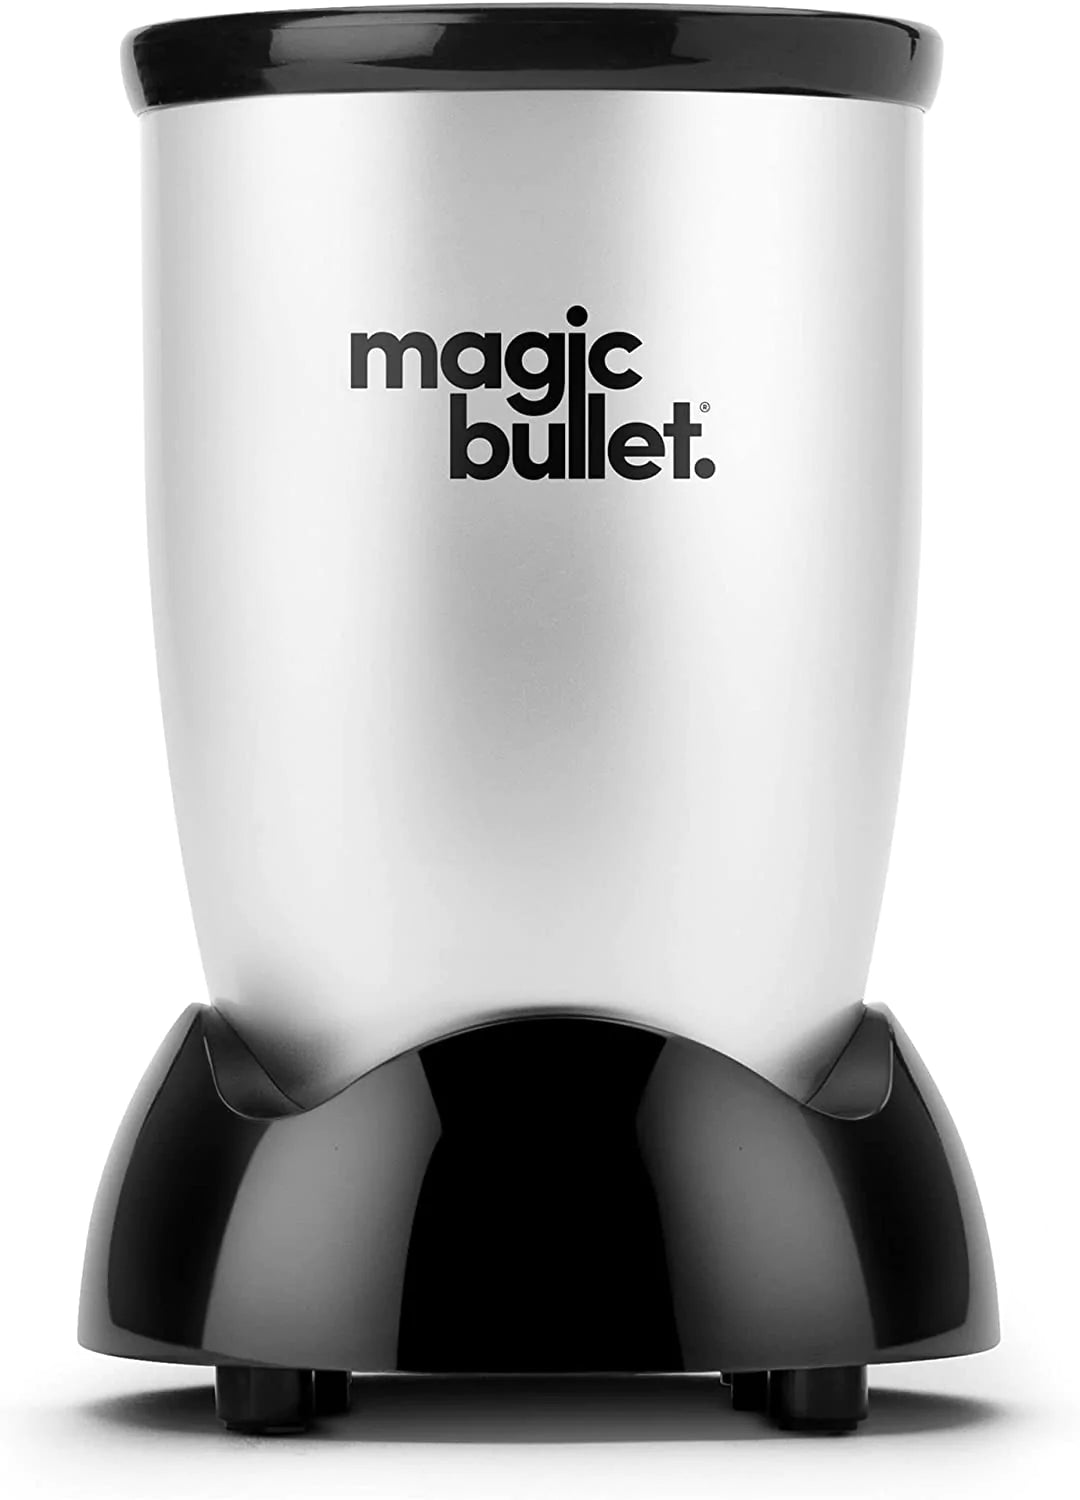 Magic Bullet Blender, Small, Silver, 11 Piece Set – ONYT